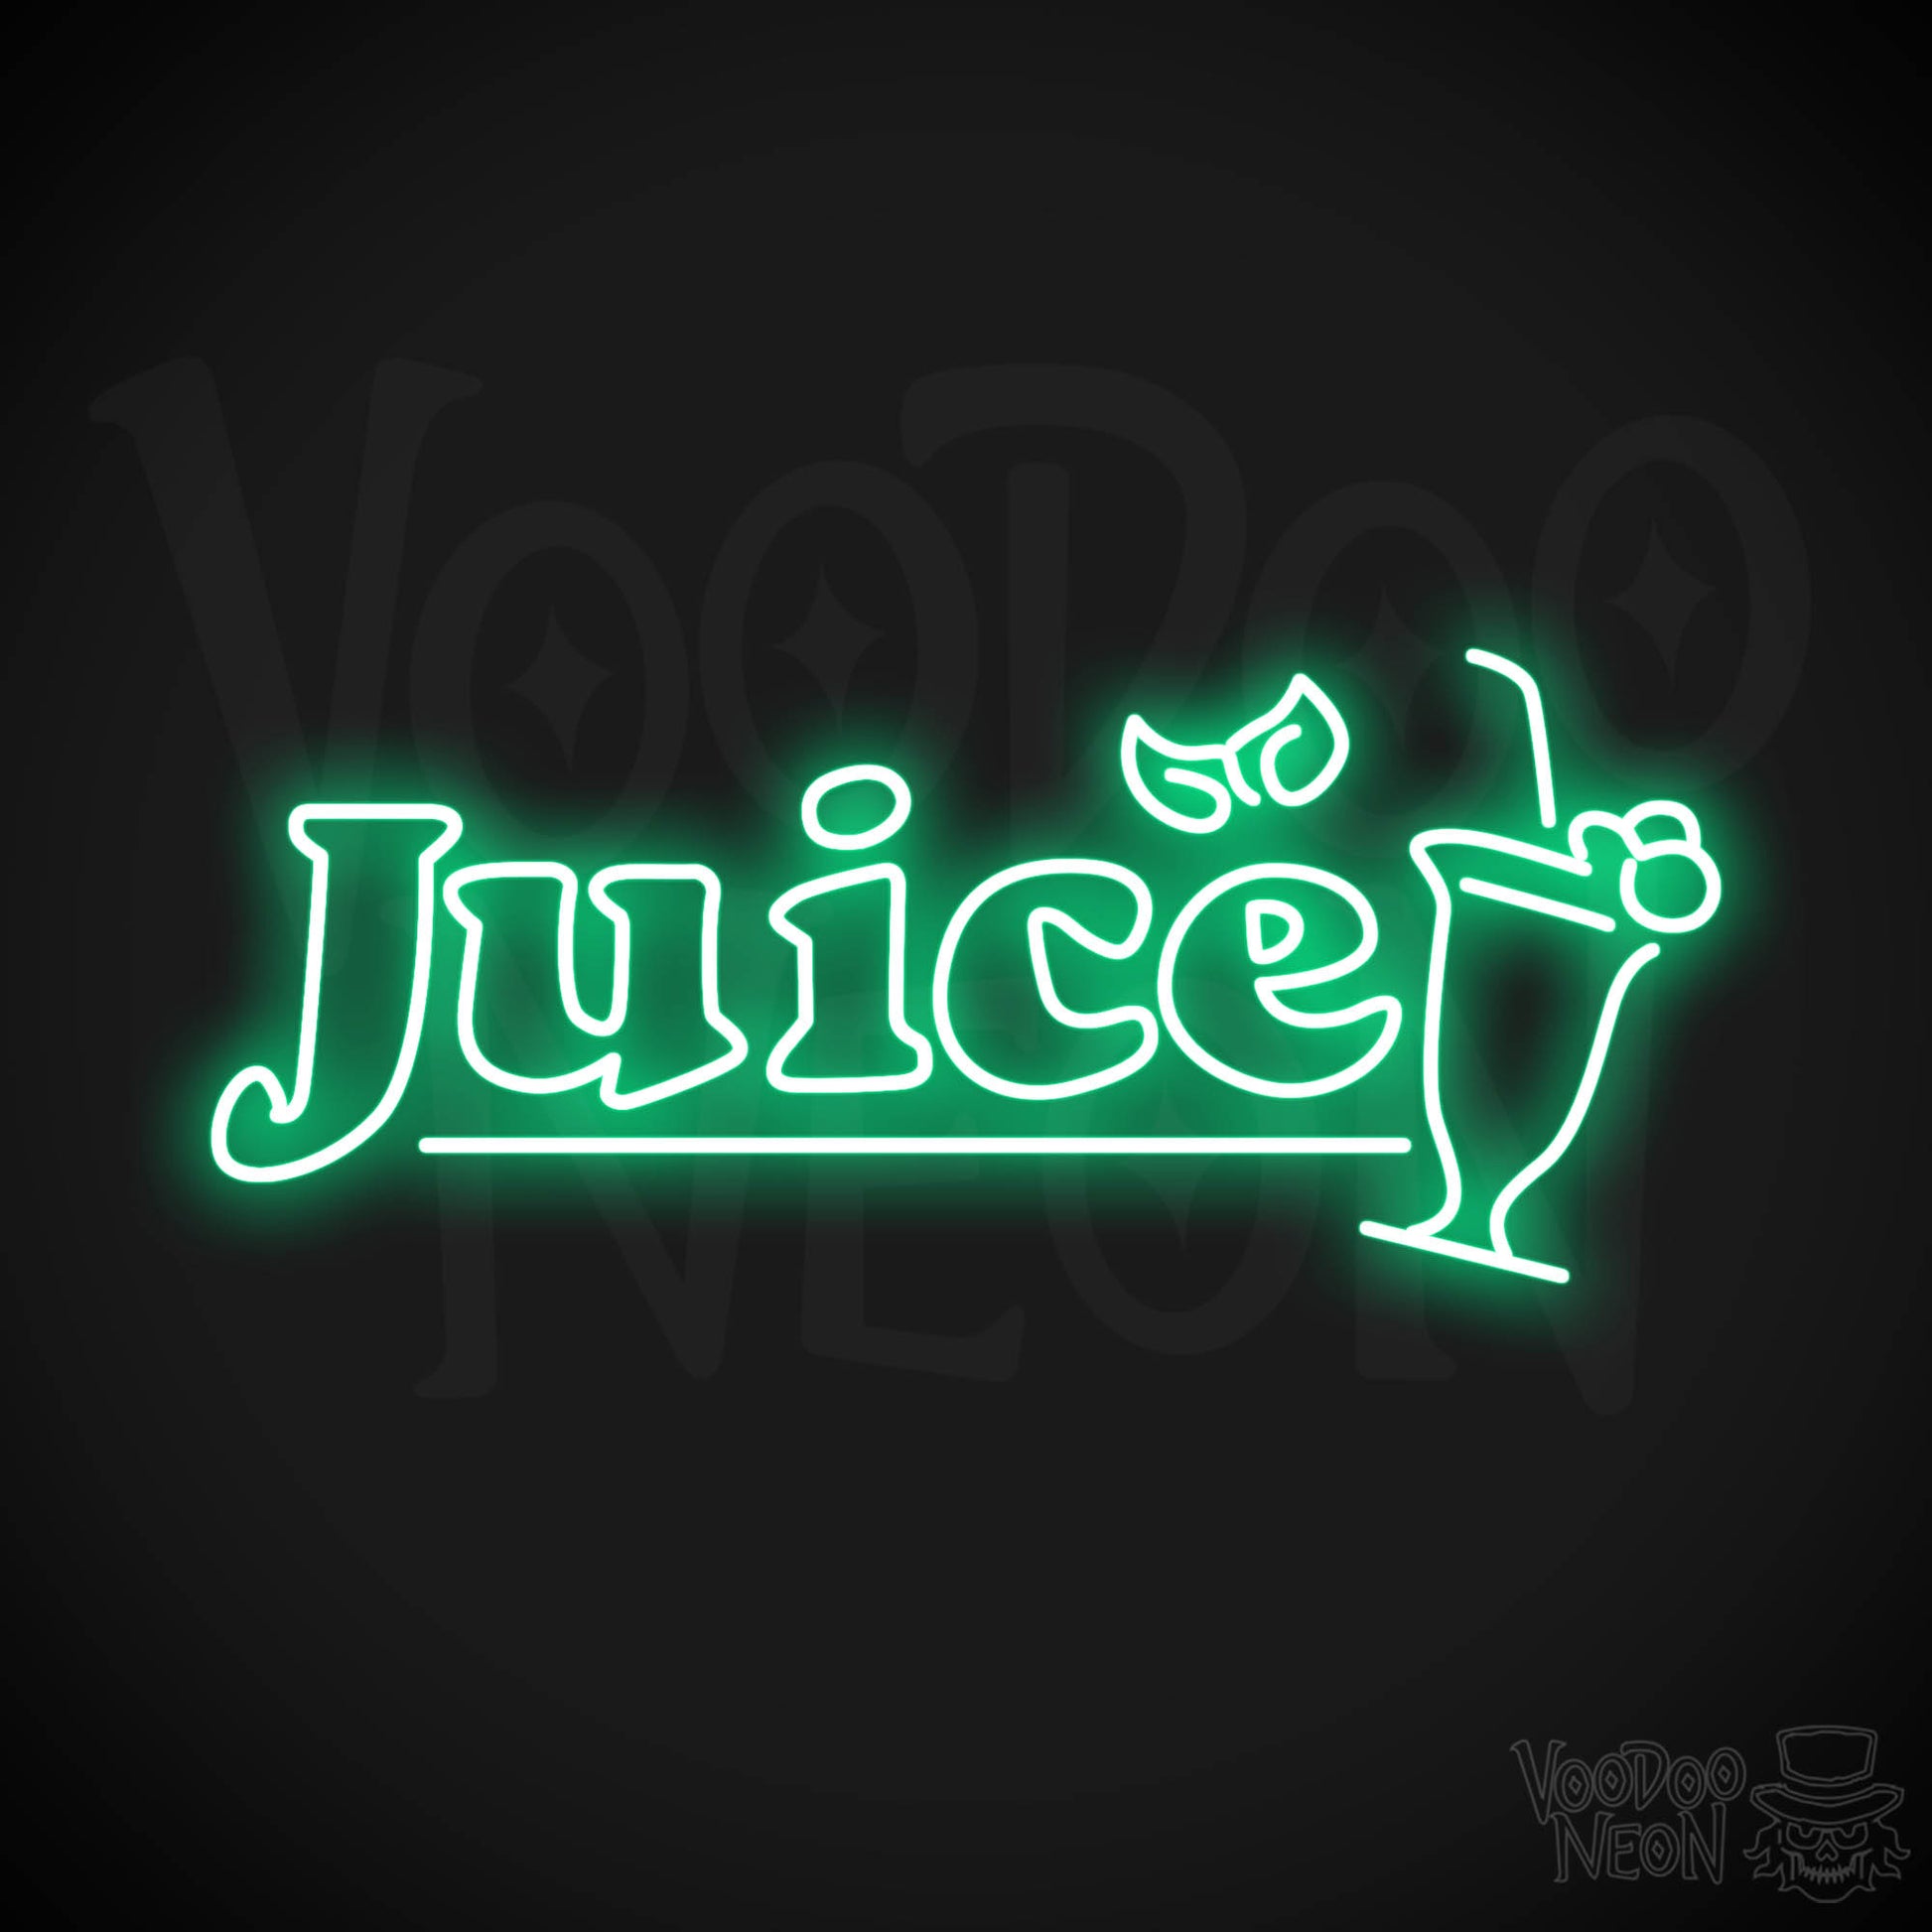 Juice LED Neon - Green